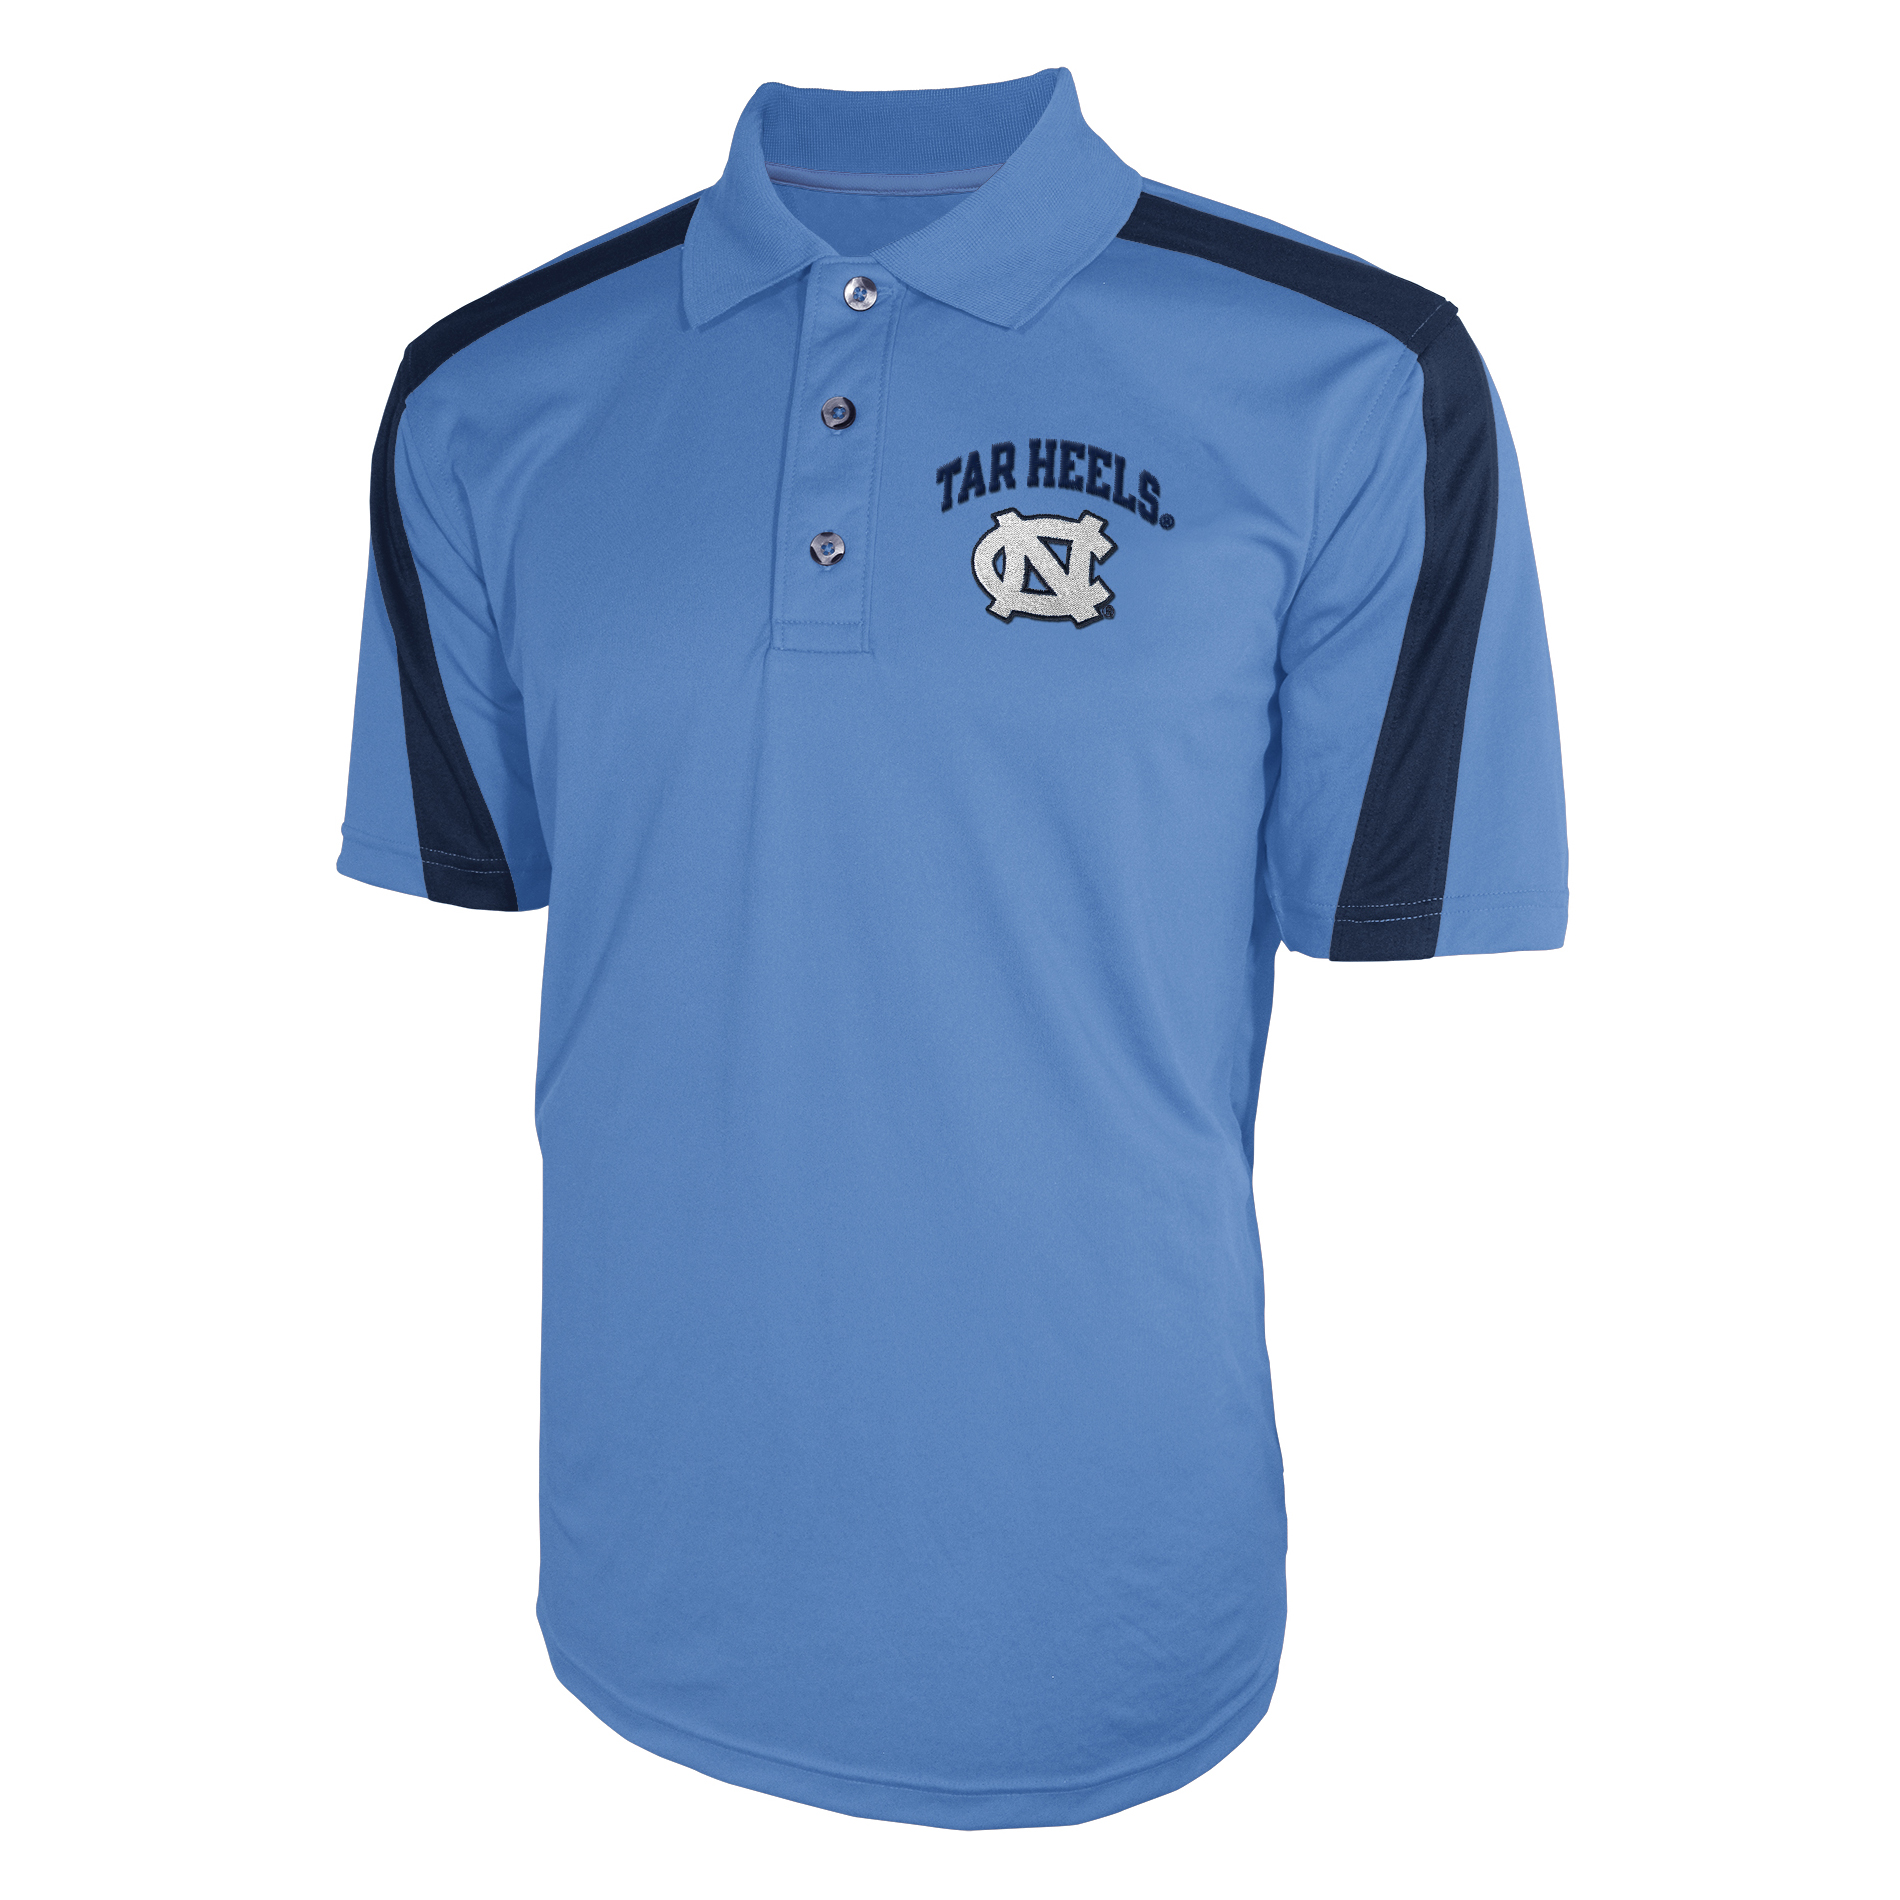 NCAA Men's Big & Tall Polo Shirt - University of North Carolina Tar Heels